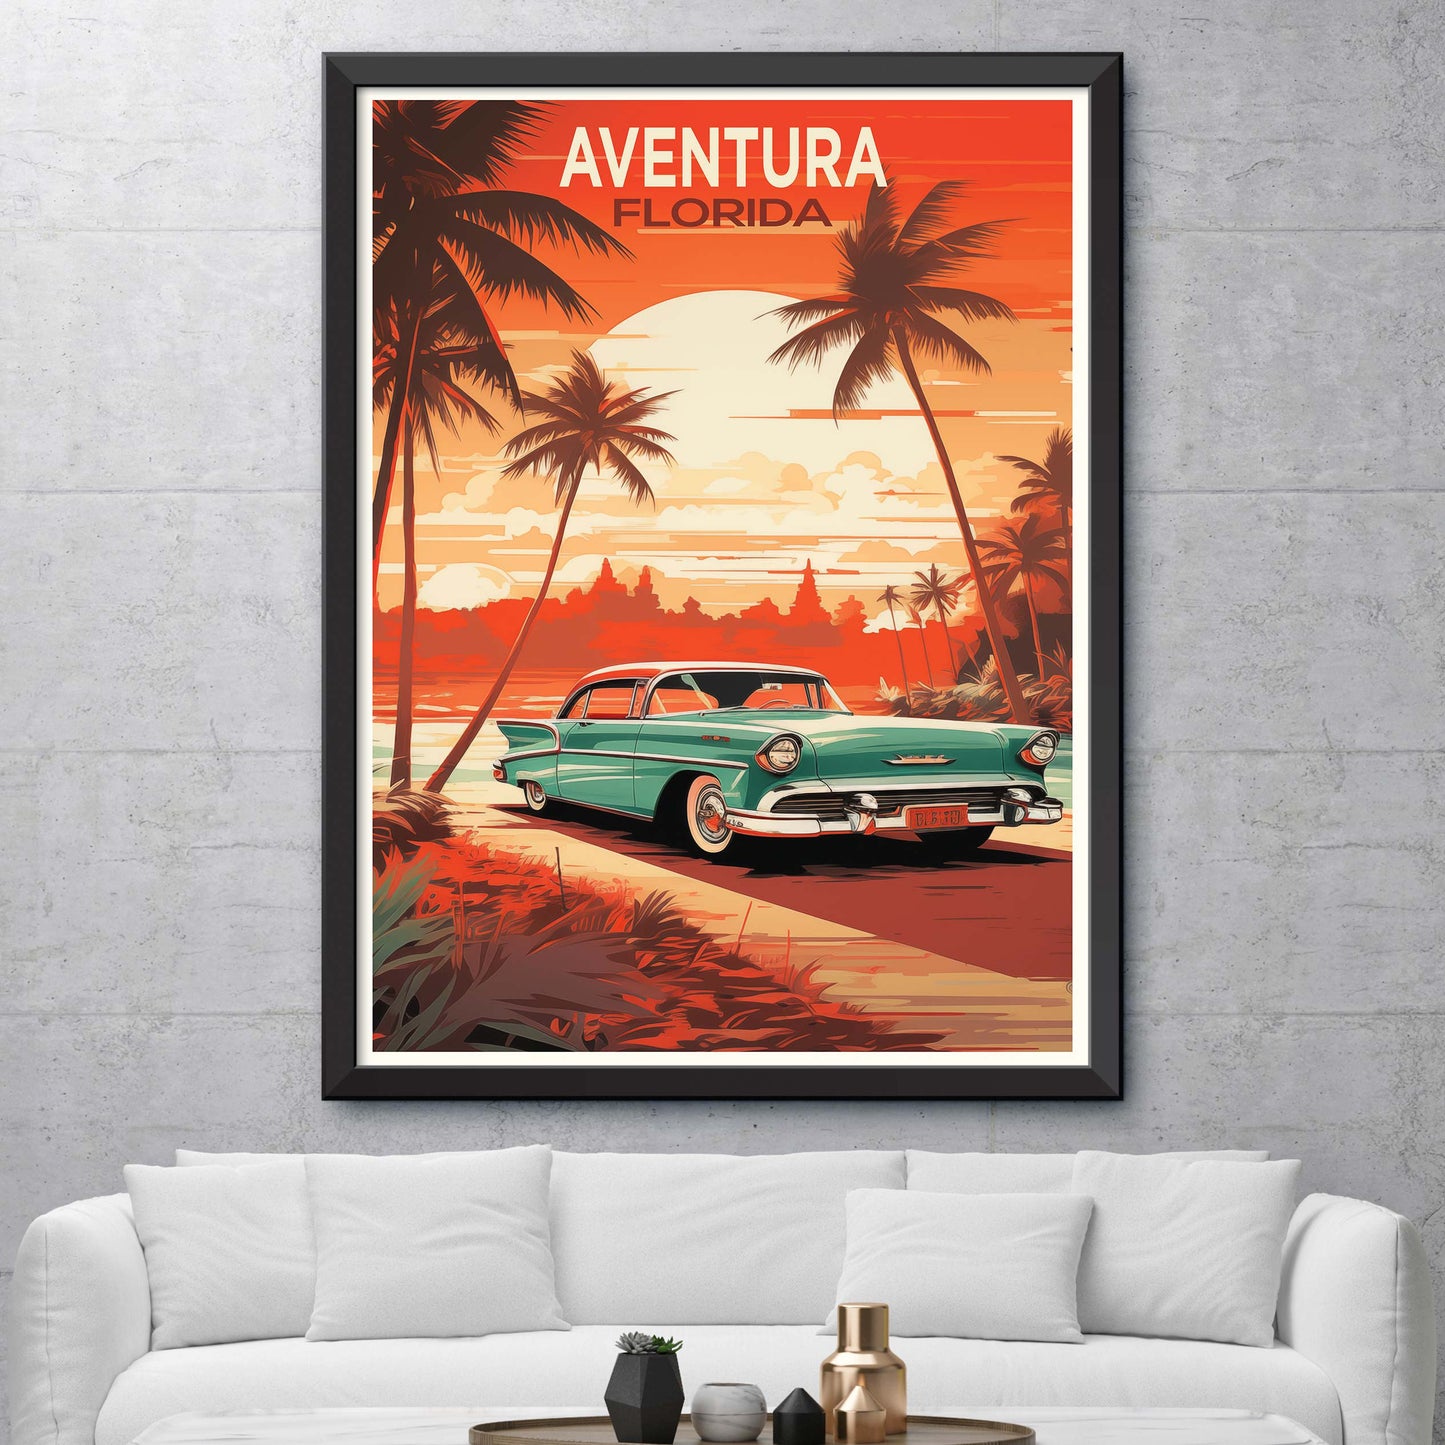 Aventura Florida Poster - Aventura Florida Print - Aventura Illustration Print